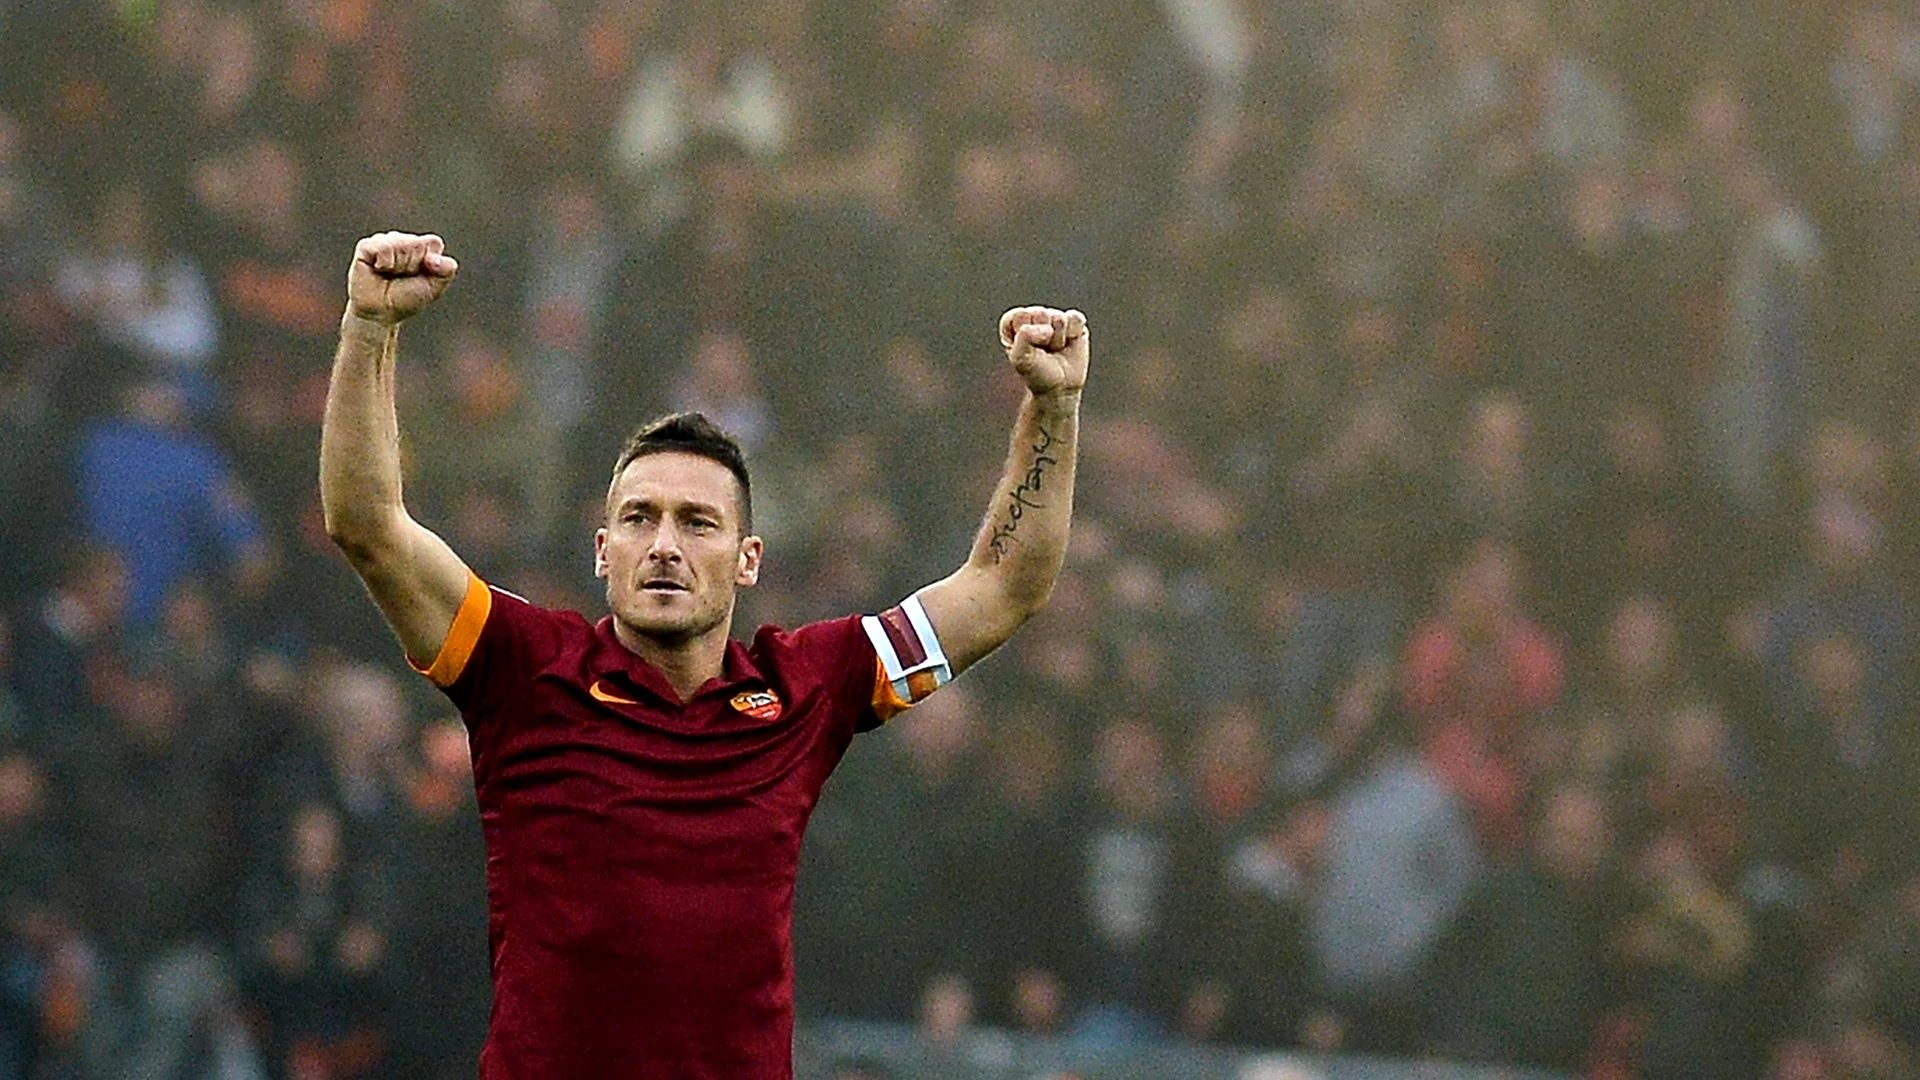 Francesco Totti As Roma Wallpaper